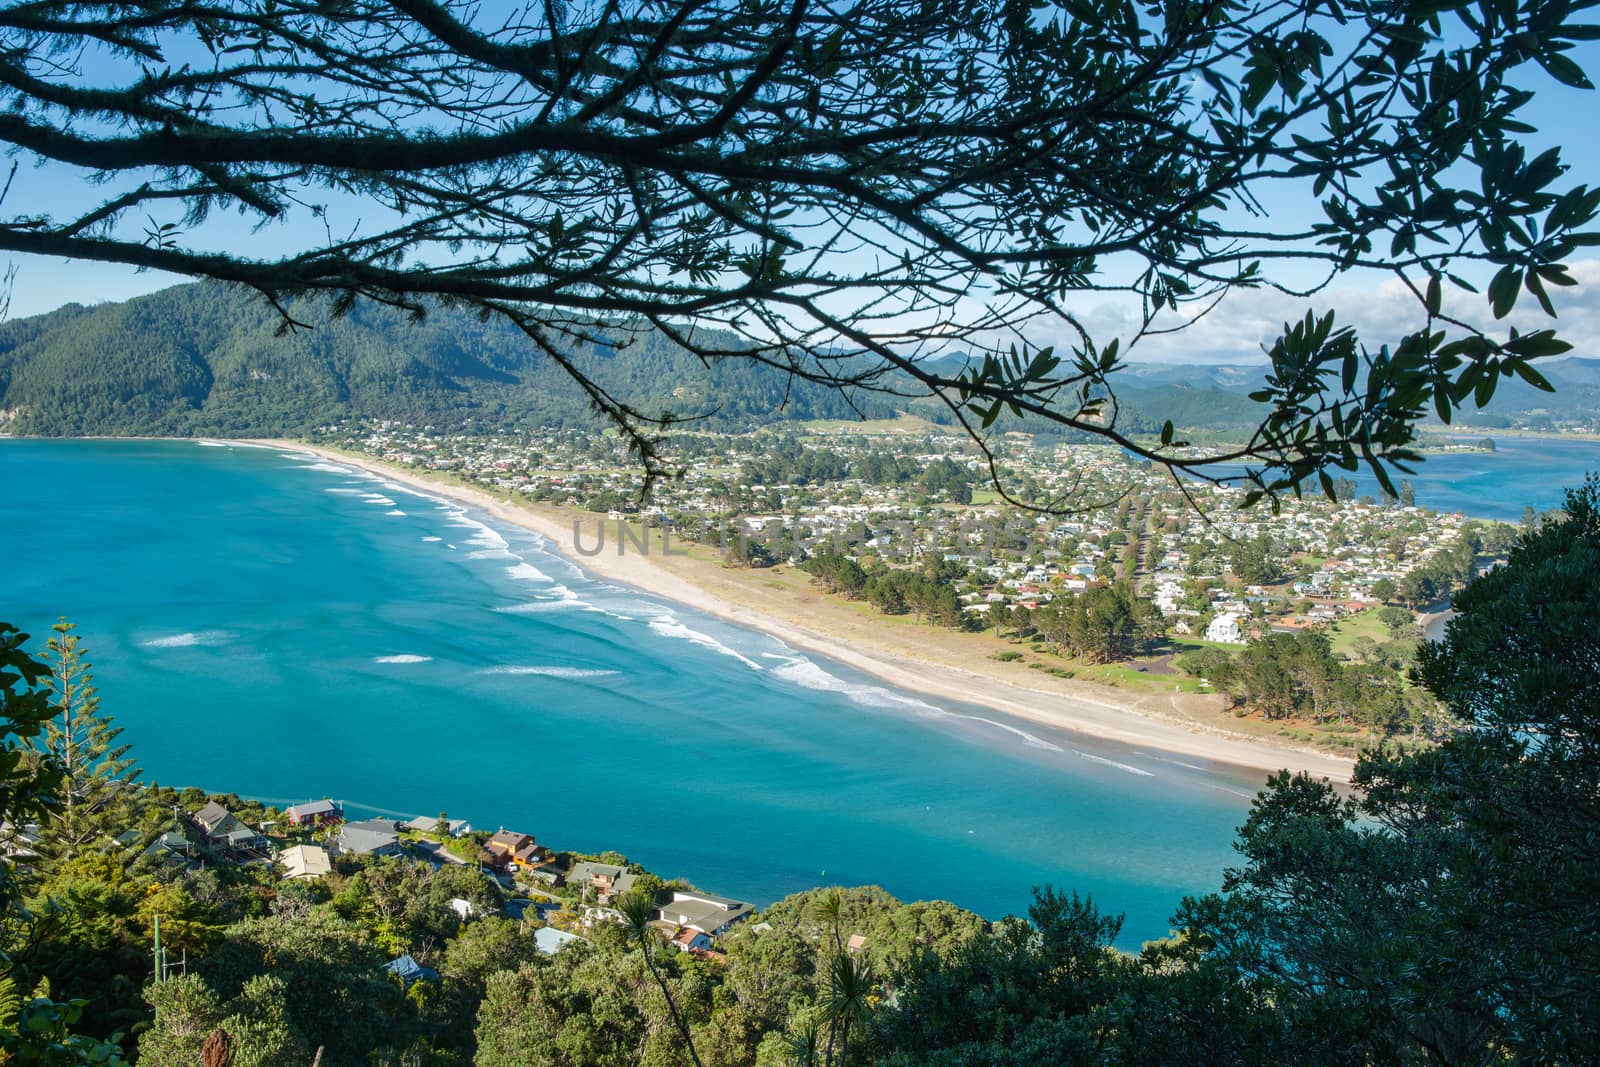 Tairua township and beach on Coromandel Peninsula, New Zealand by brians101